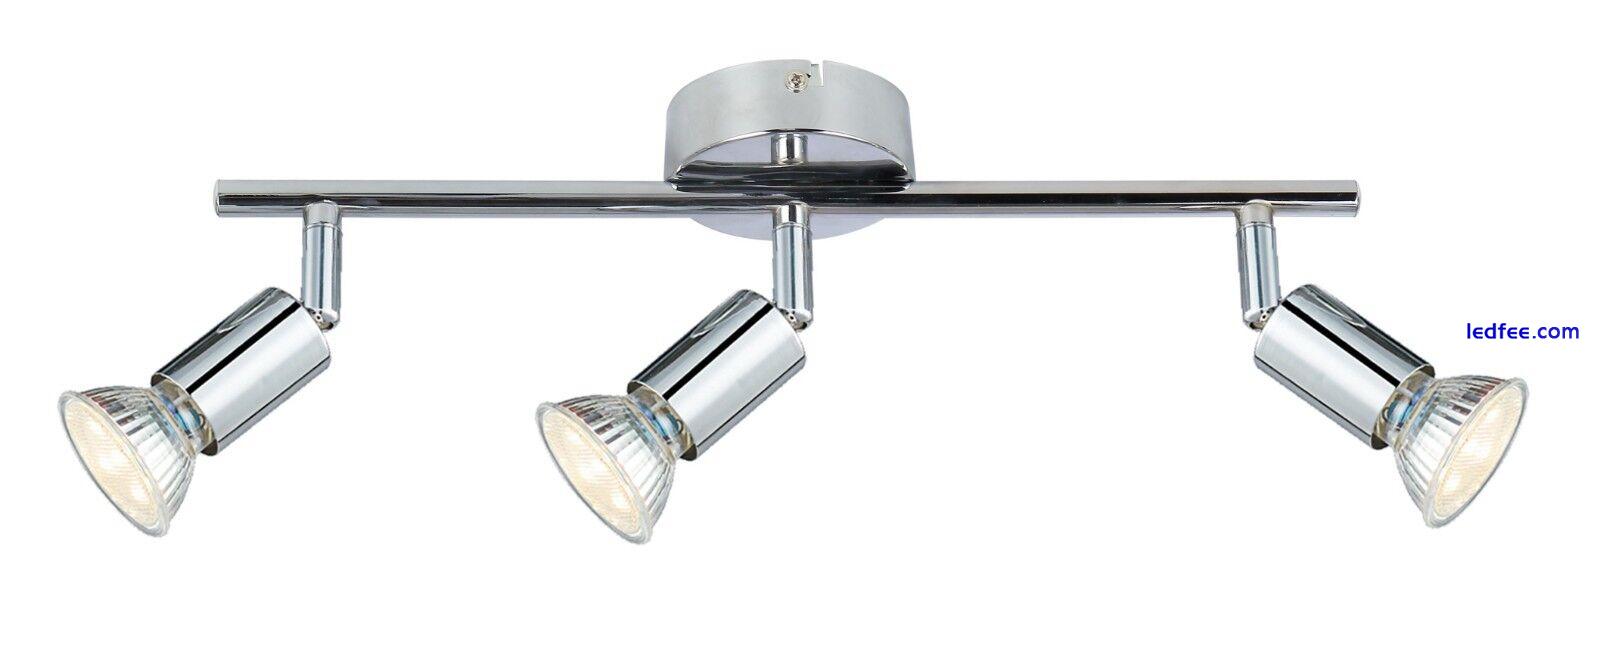 3 Way Modern Ceiling Spotlights GU10 Bulbs Adjustable LED Kitchen Bar Fitting 4 